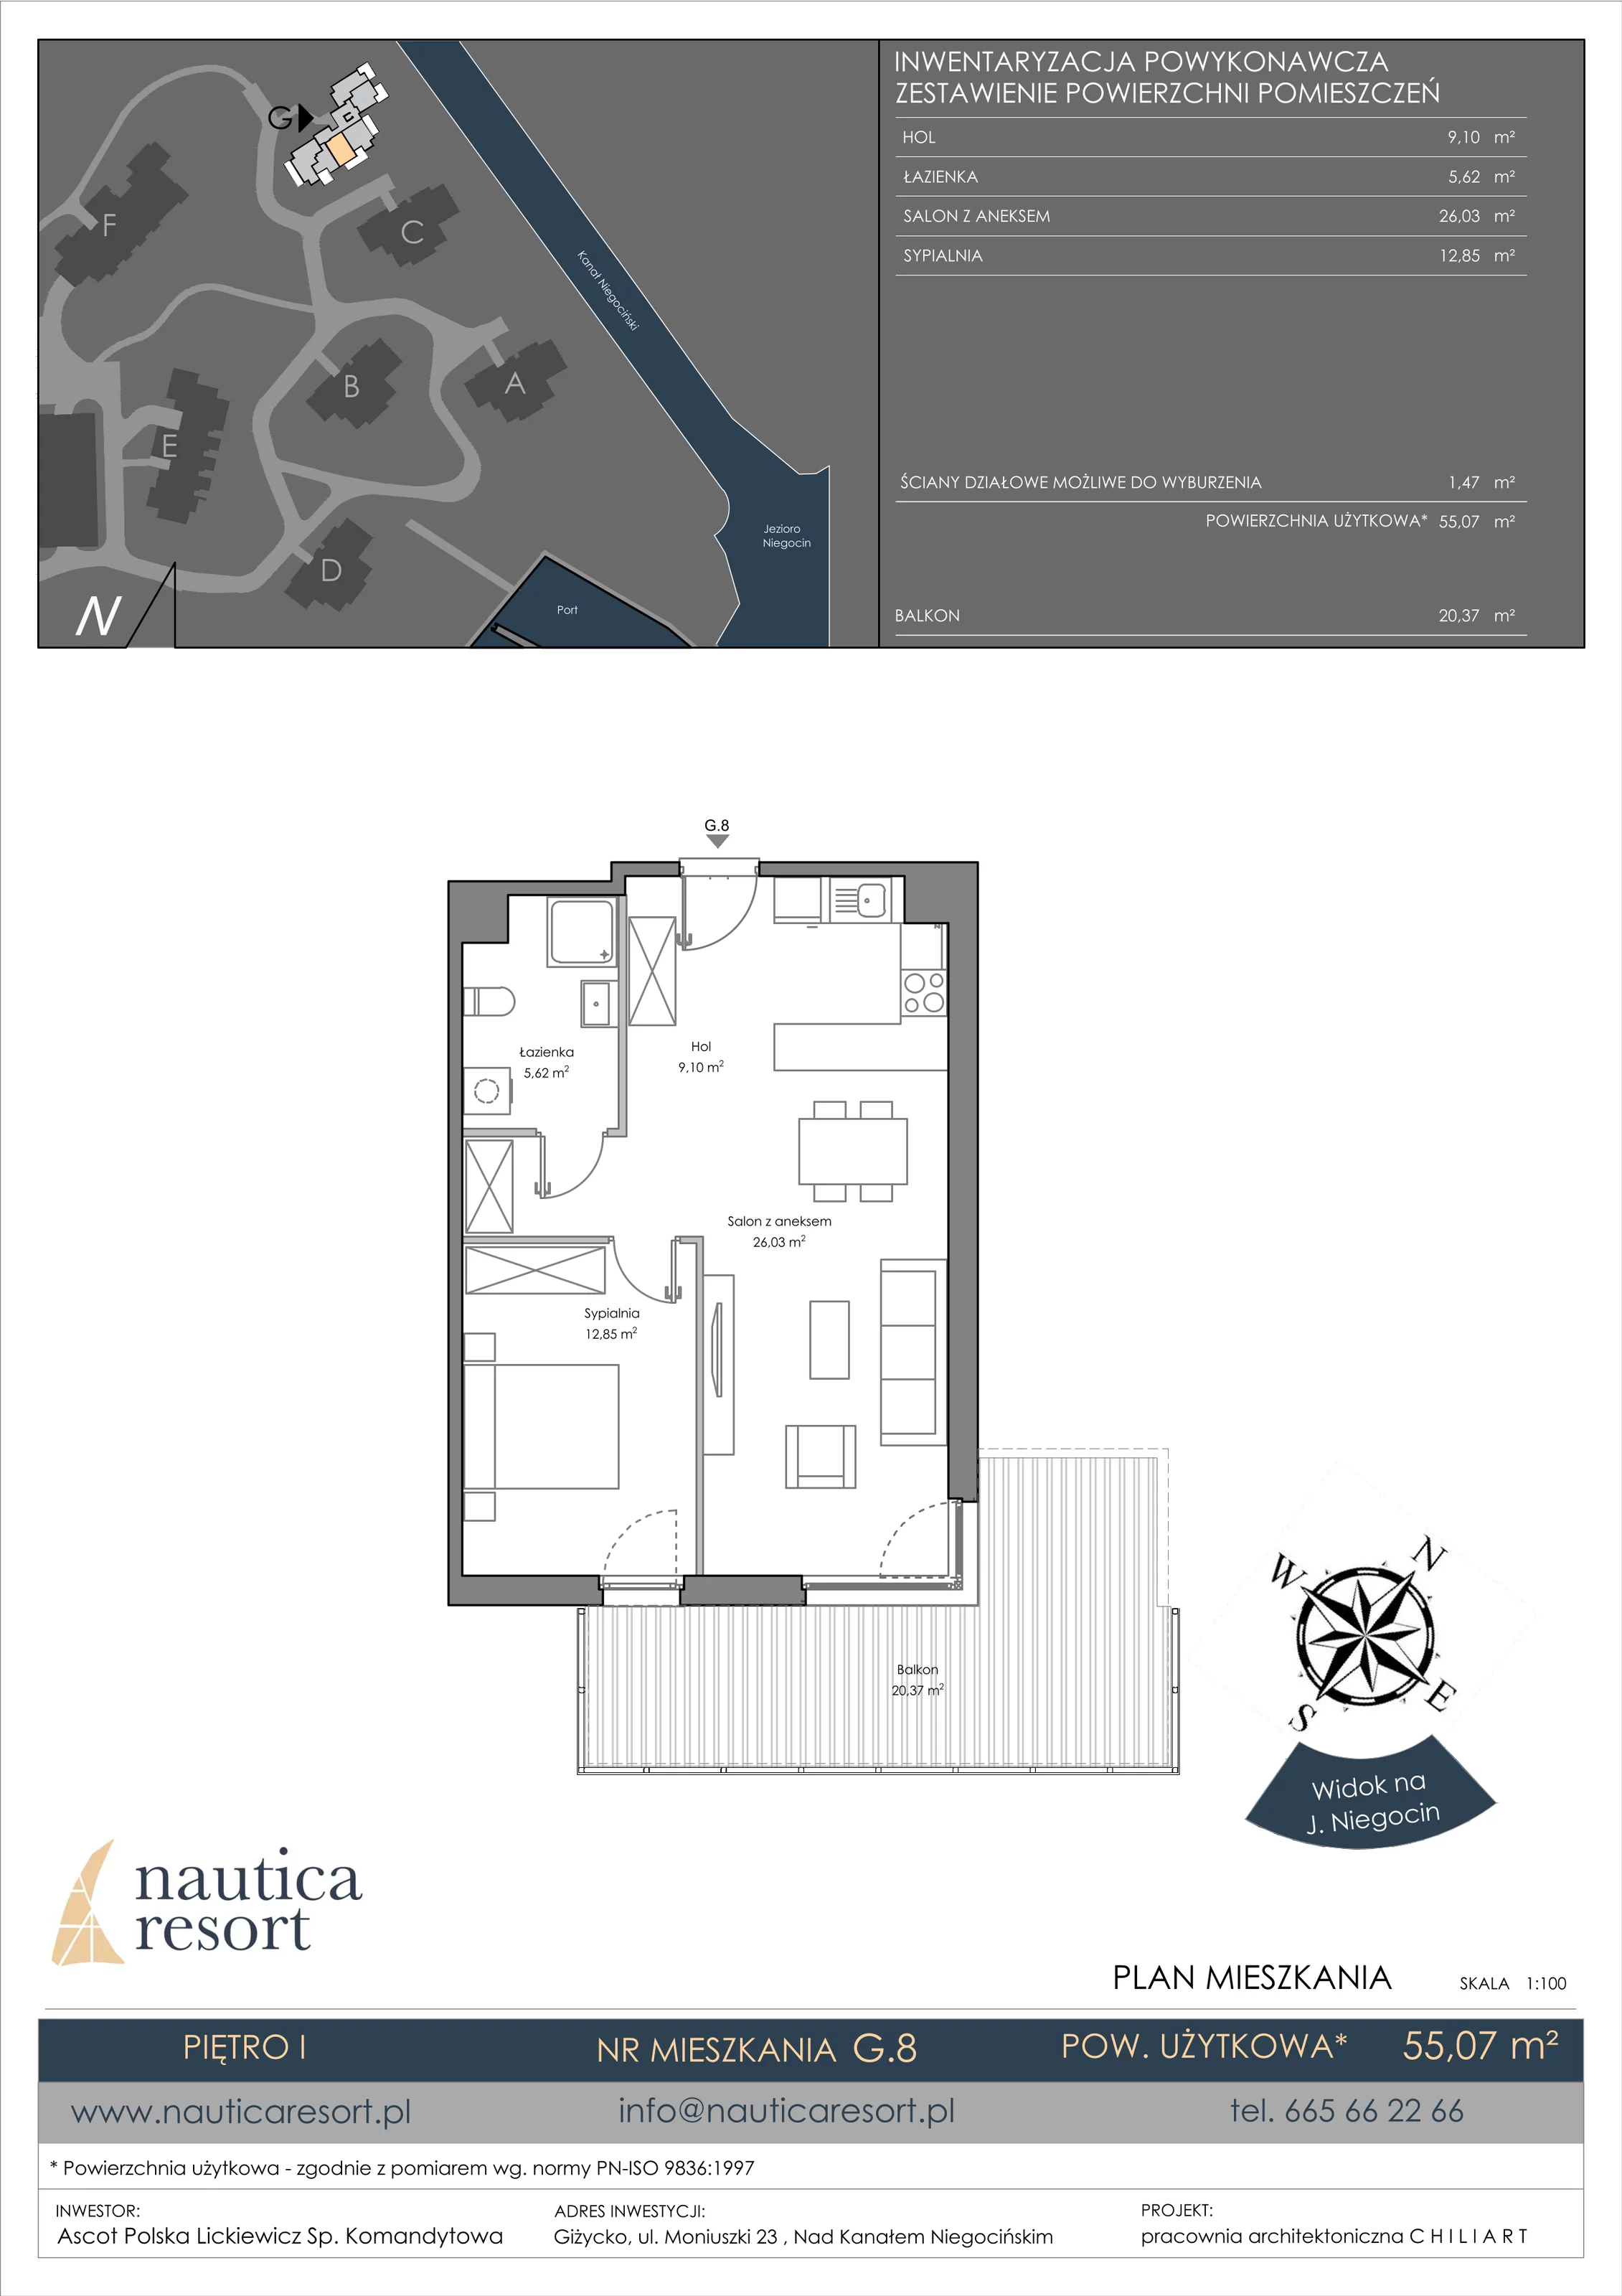 Apartament 55,07 m², piętro 1, oferta nr G.8, Nautica Resort, Giżycko, ul. Moniuszki 23